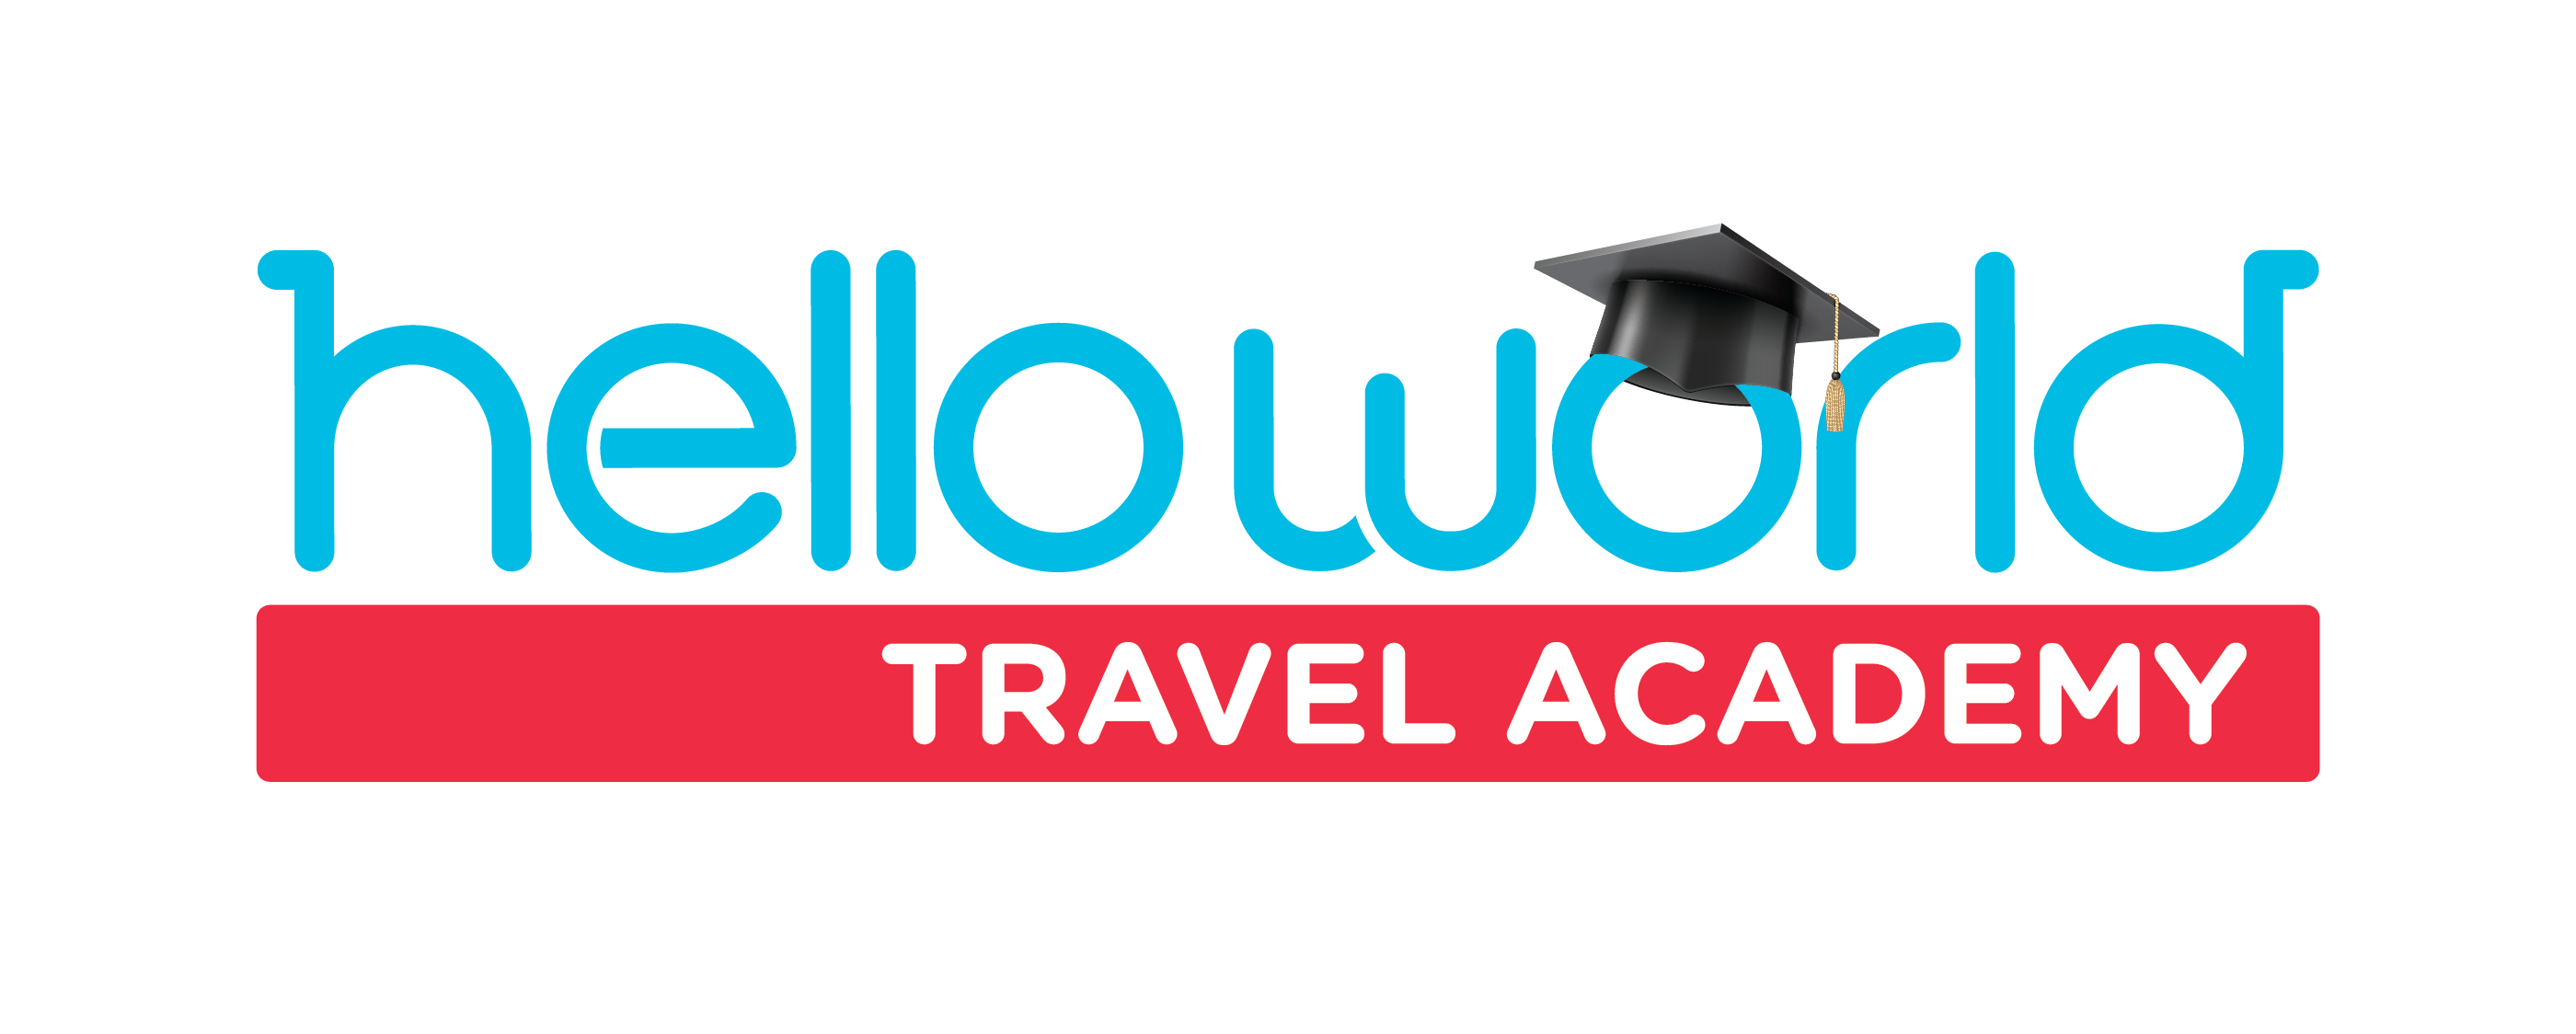 01_HW_Travel Academy_Logo-CMYK-01 (002)